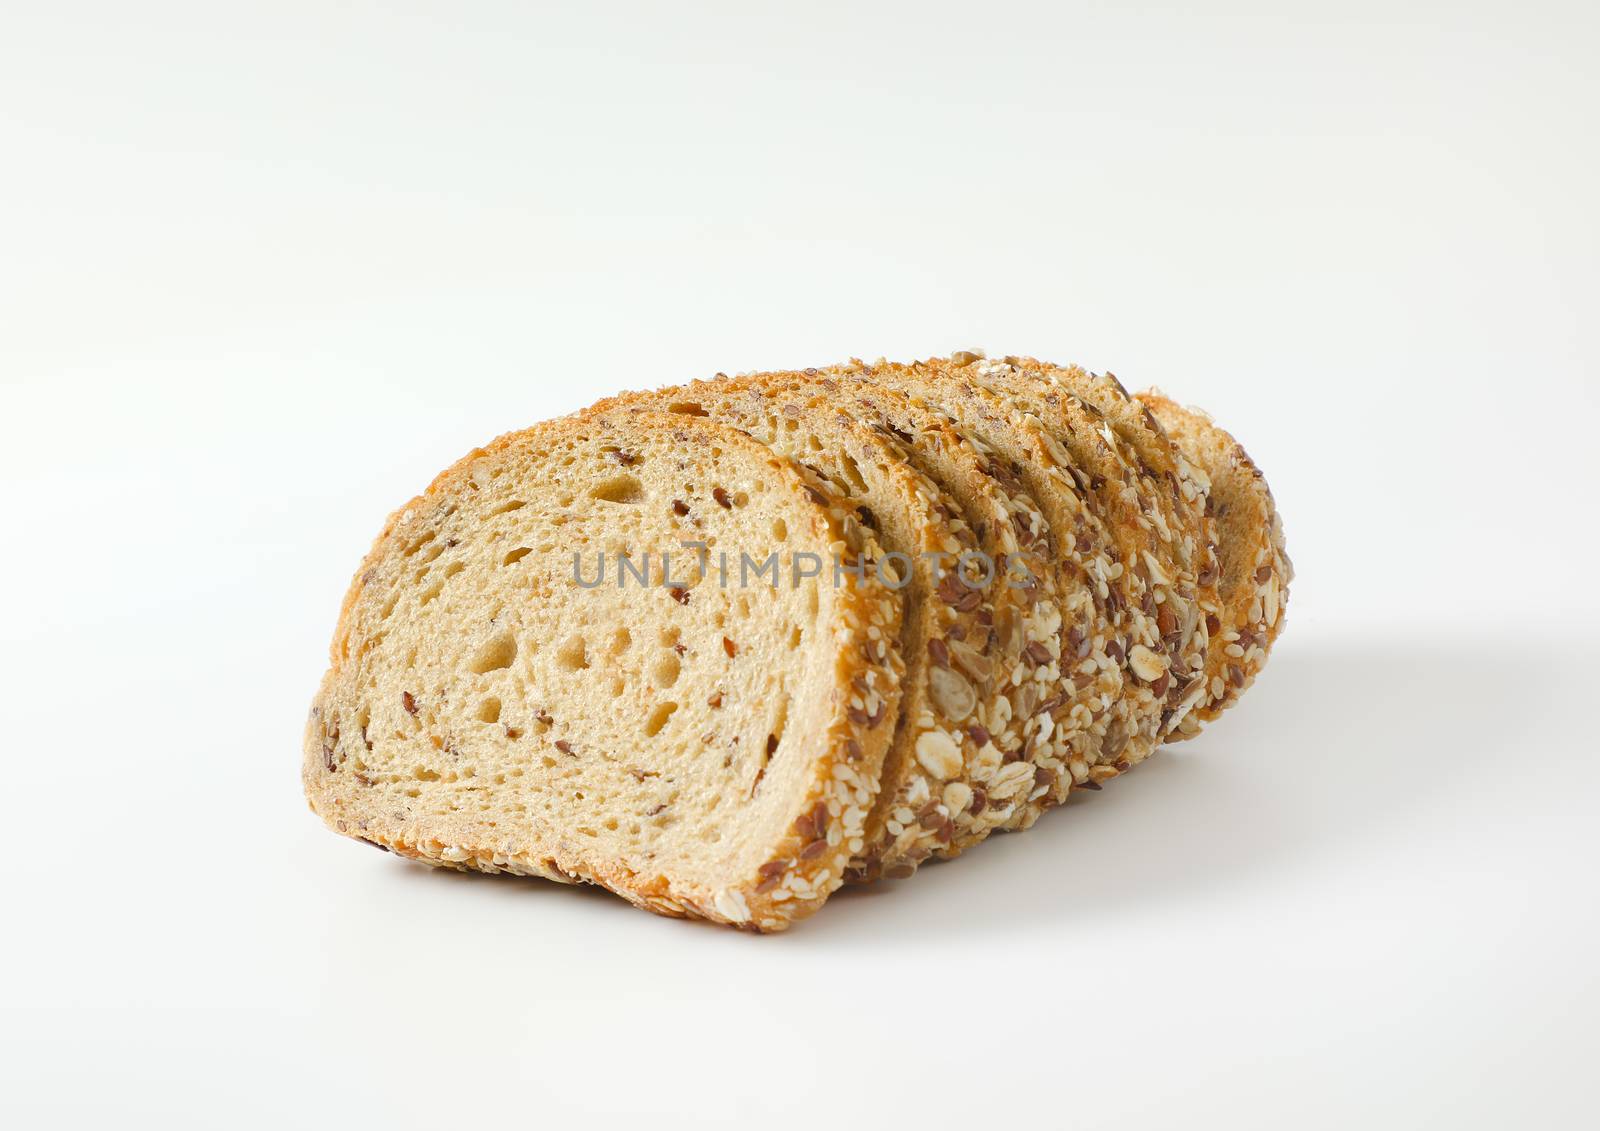 Sliced loaf of whole grain bread by Digifoodstock